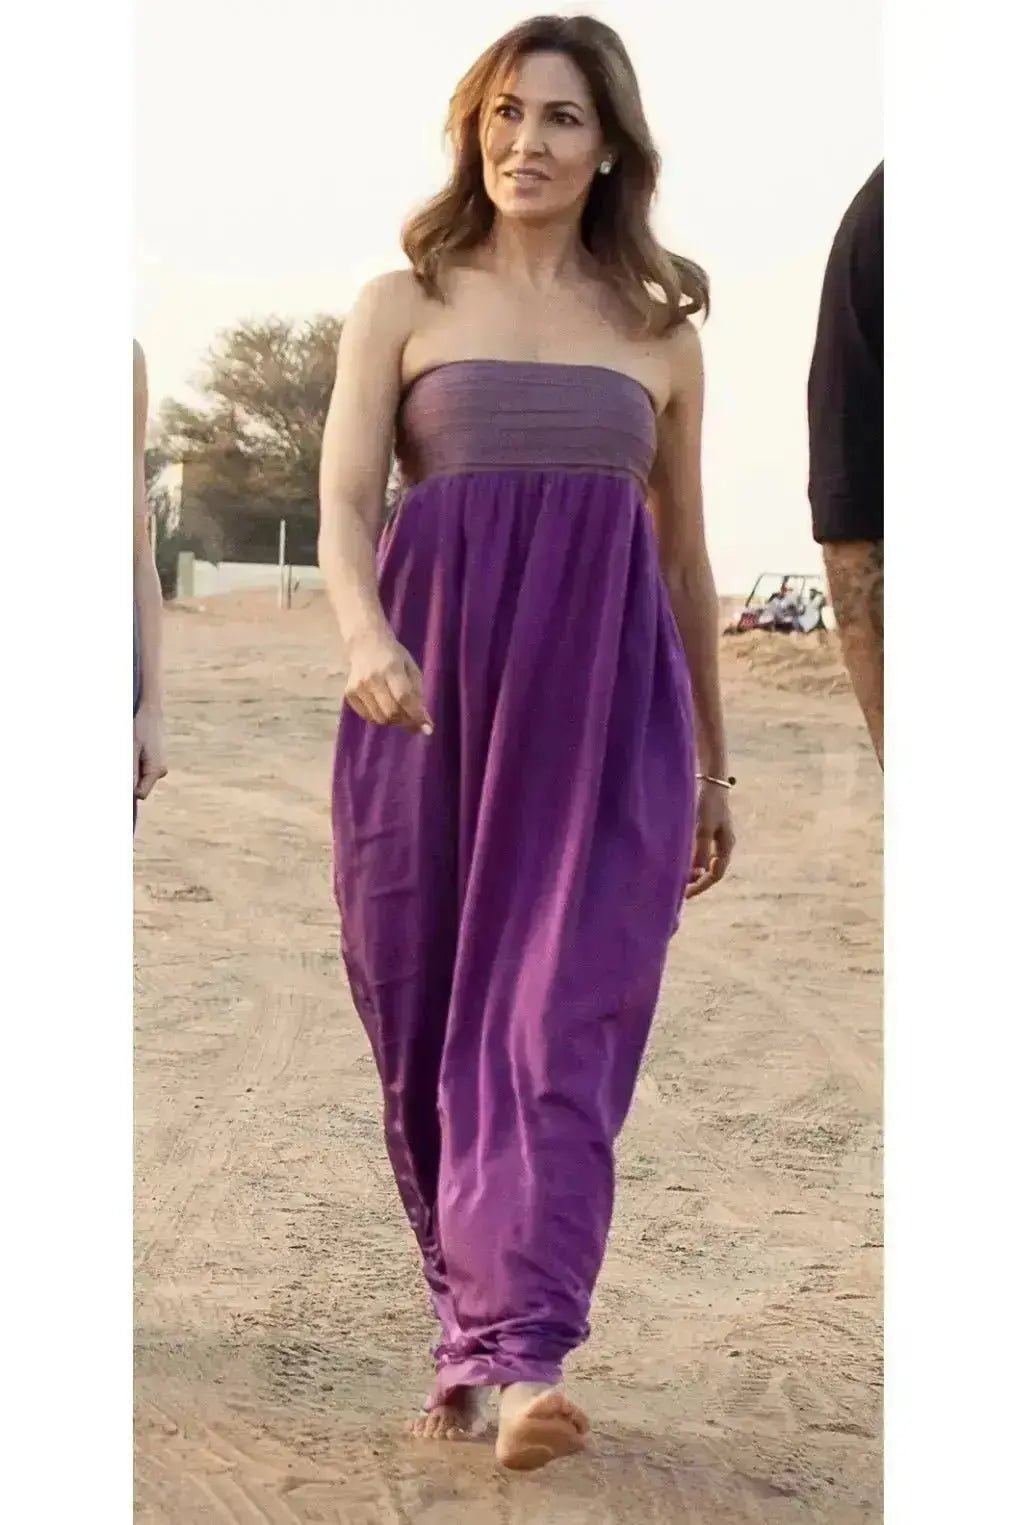 Vestido Caleta violeta - Malotabcn